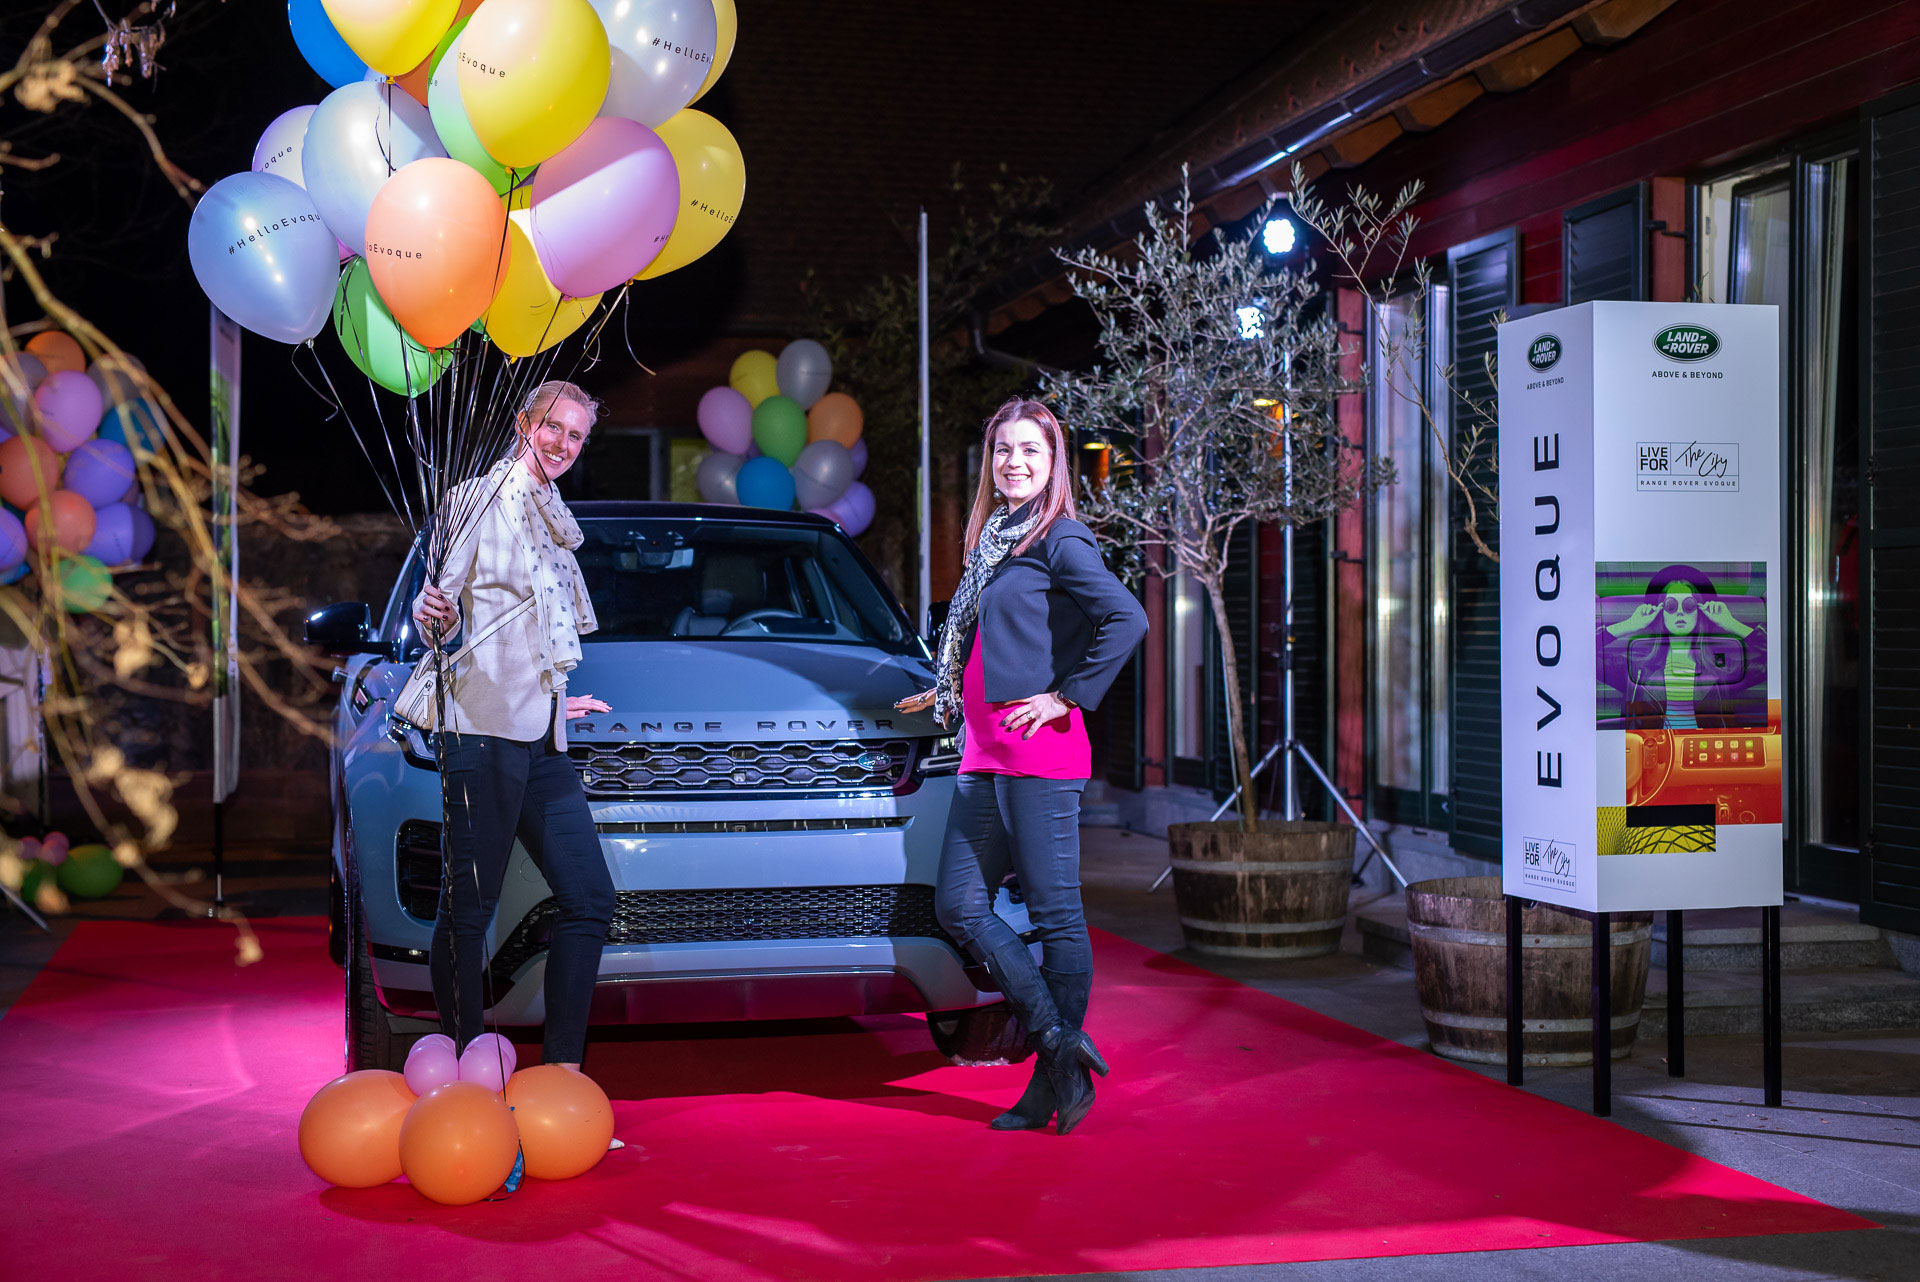 U Zagrebu predstavljen novi Range Rover Evoque